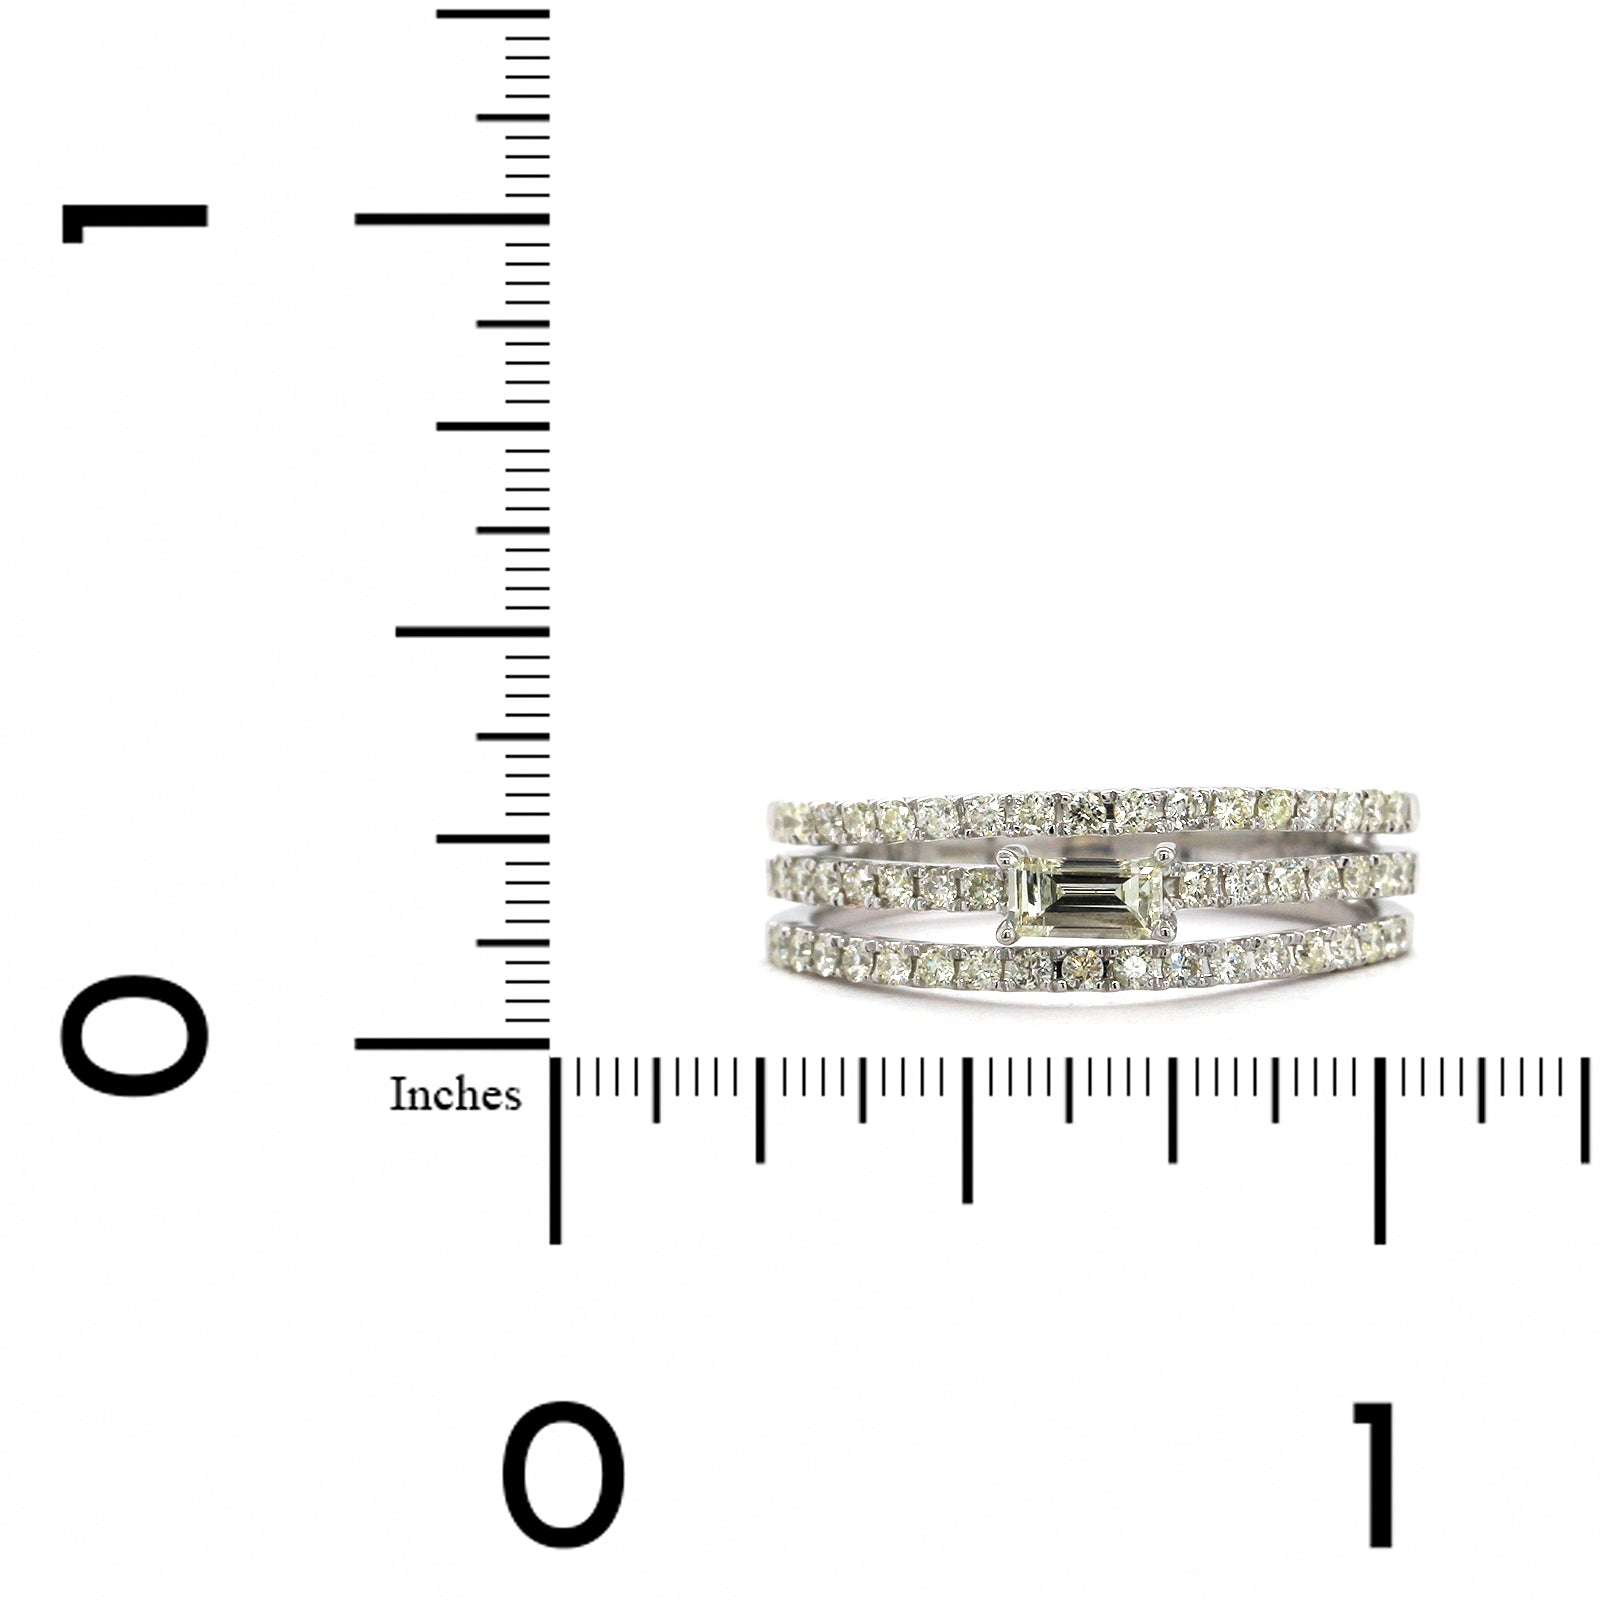 14K White Gold 3 Row Round Baguette Center Diamond Ring, 14k white gold, Long's Jewelers